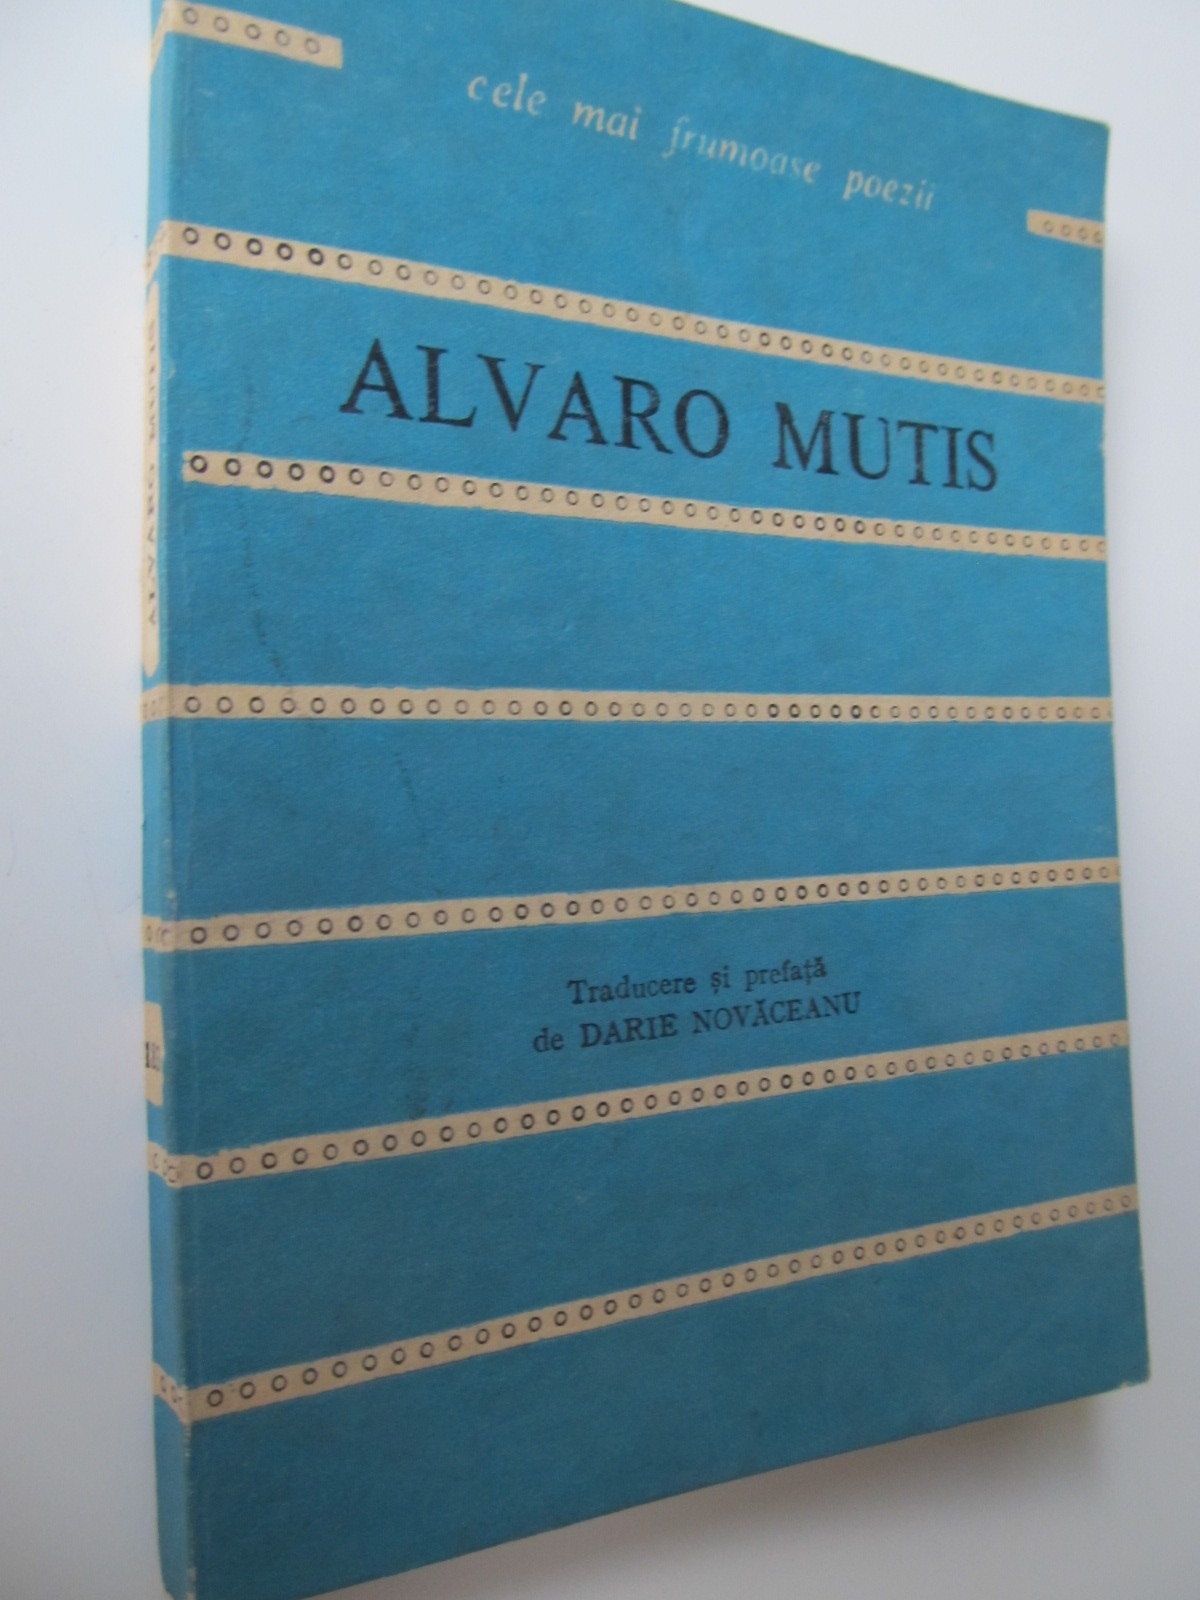 Poemele lui Maqroll El Gaviero (Cele mai frumoase poezii) - Alvaro Mutis | Detalii carte